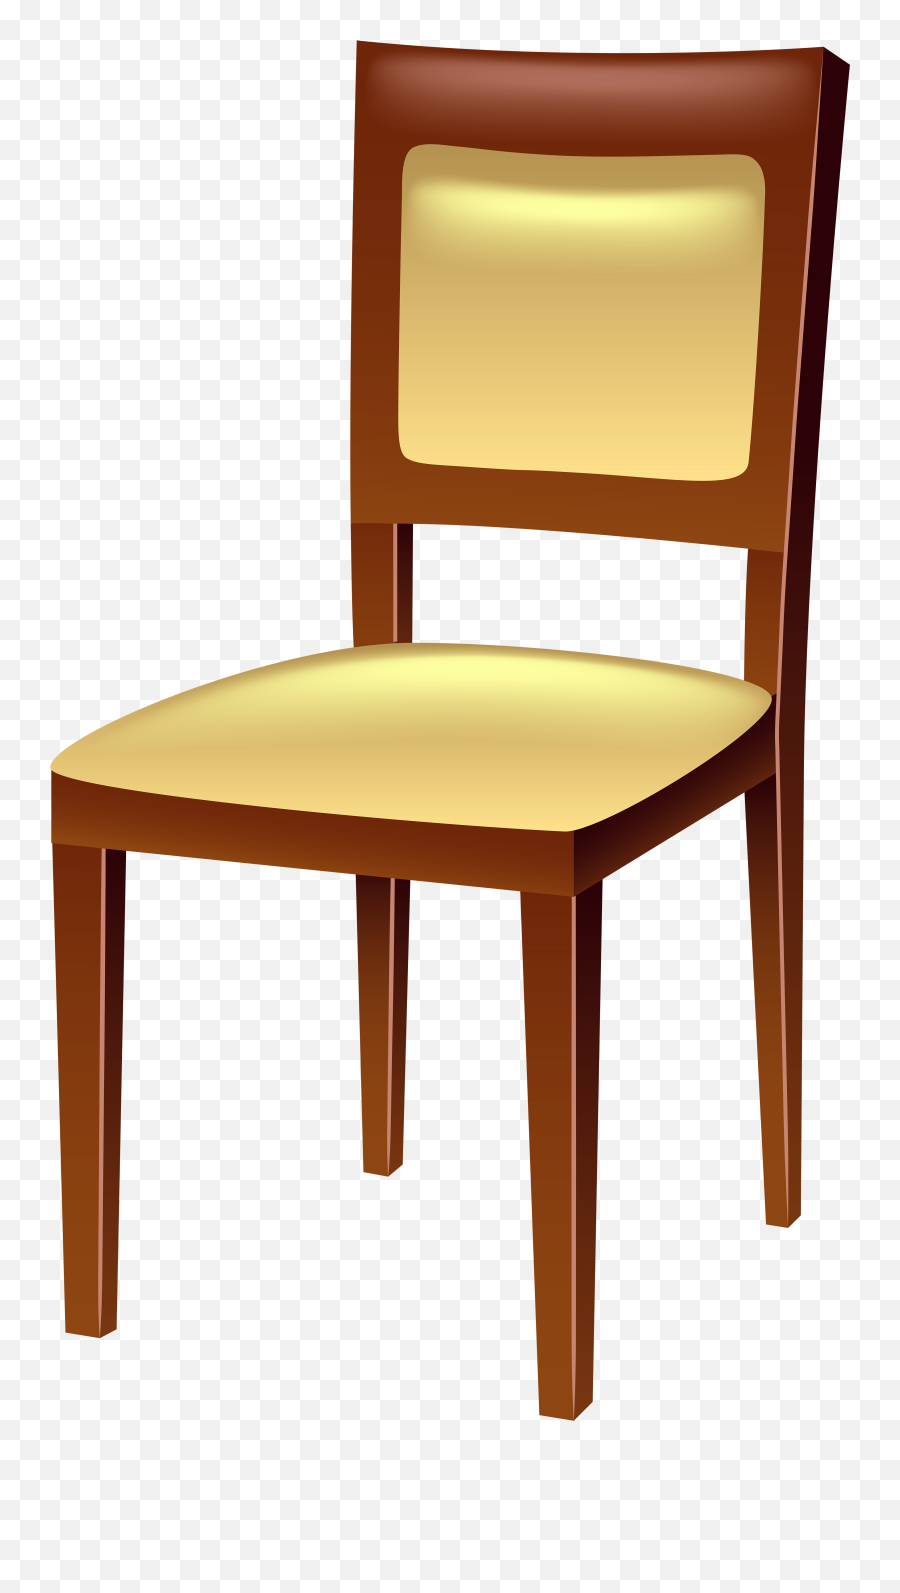 Transparent Chair Clipart Png - Chair Clipart Transparent Background,Chair Clipart Png